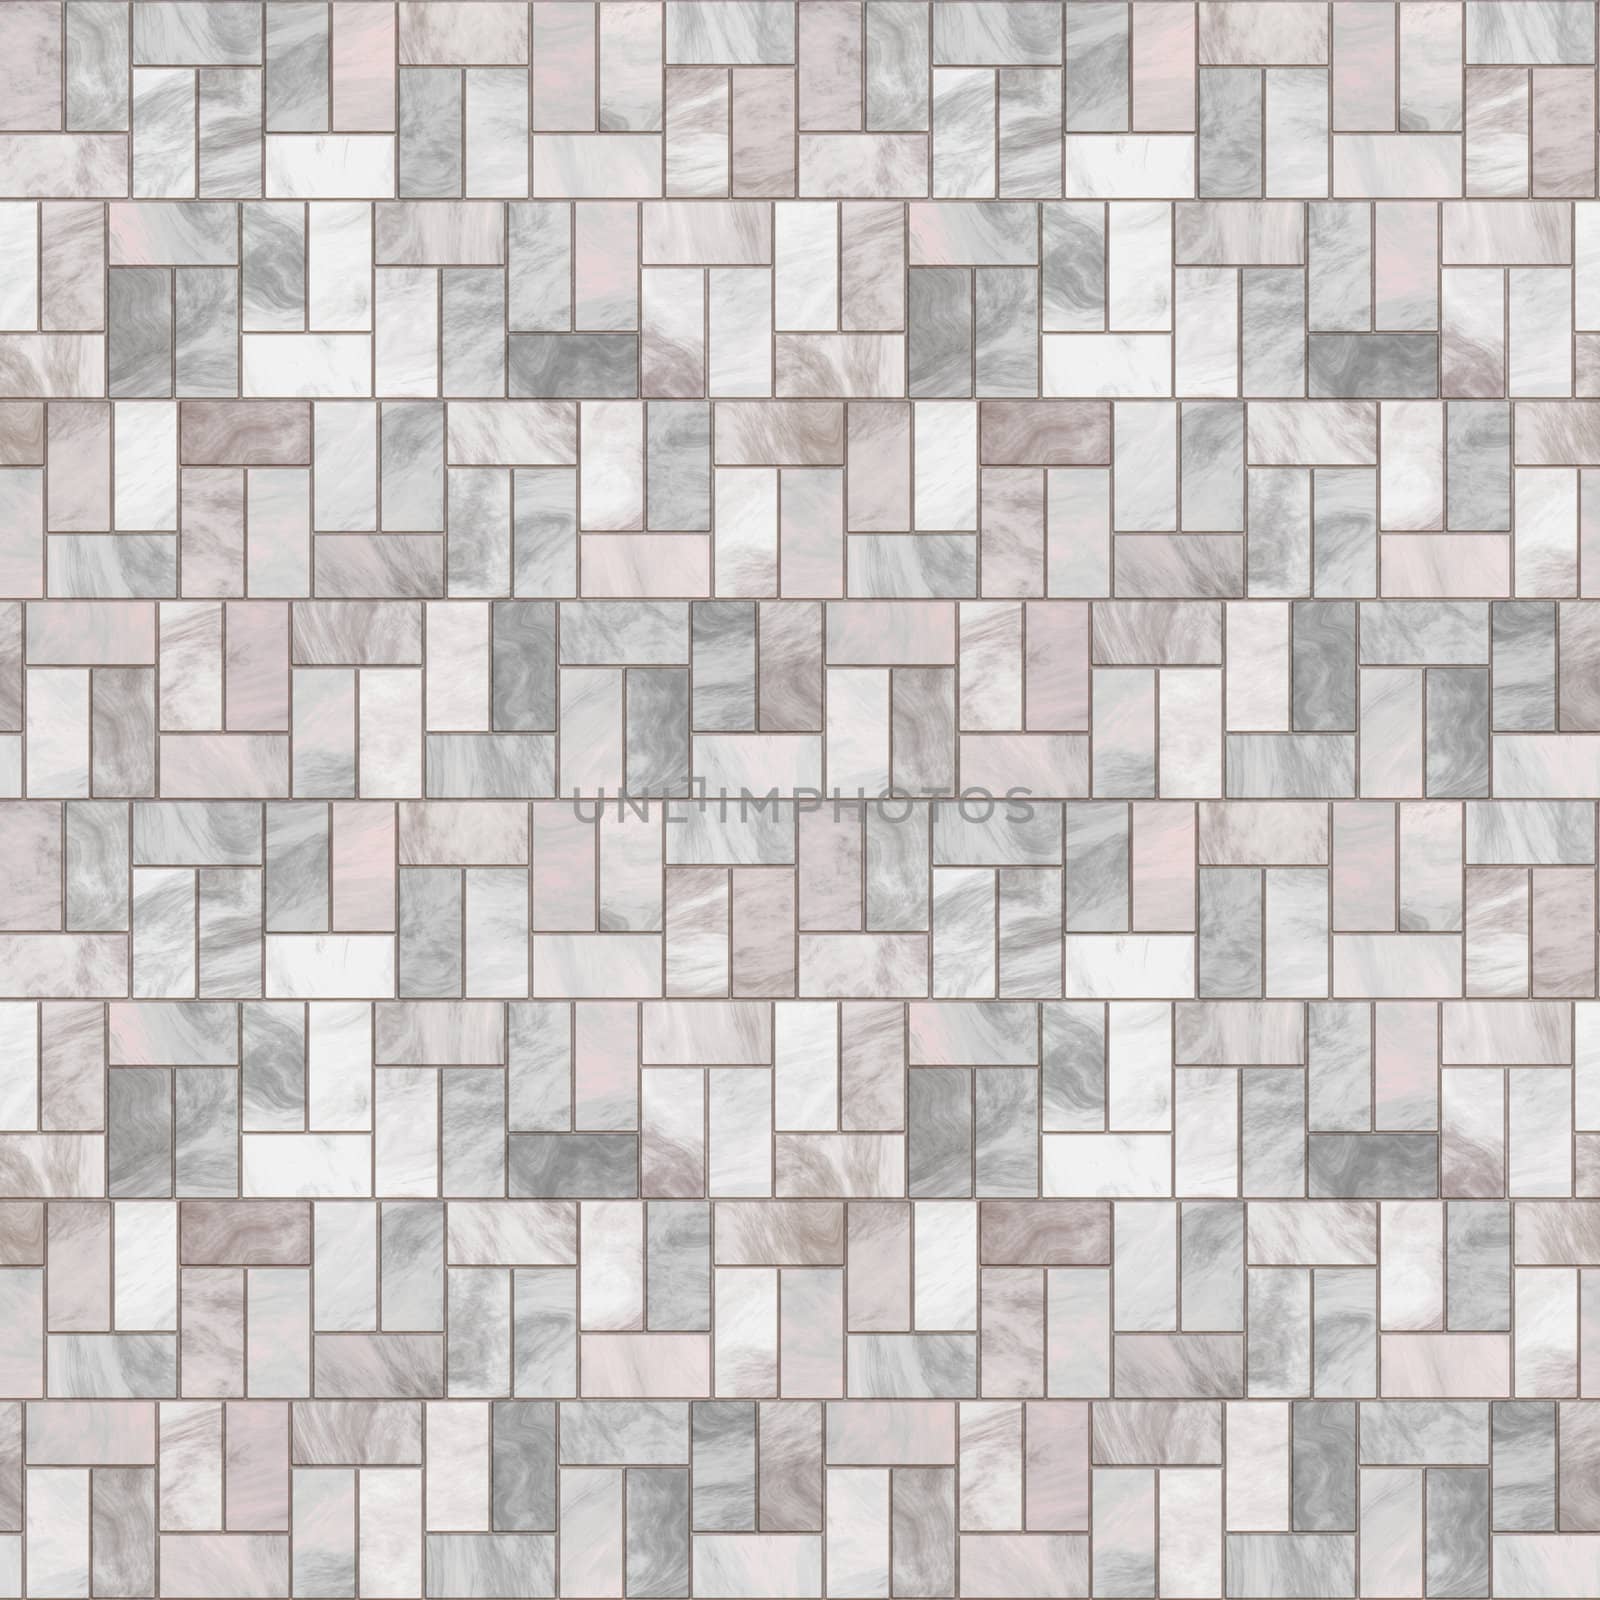 Stone Floor Seamless Pattern - Hyper Realistic Illustration